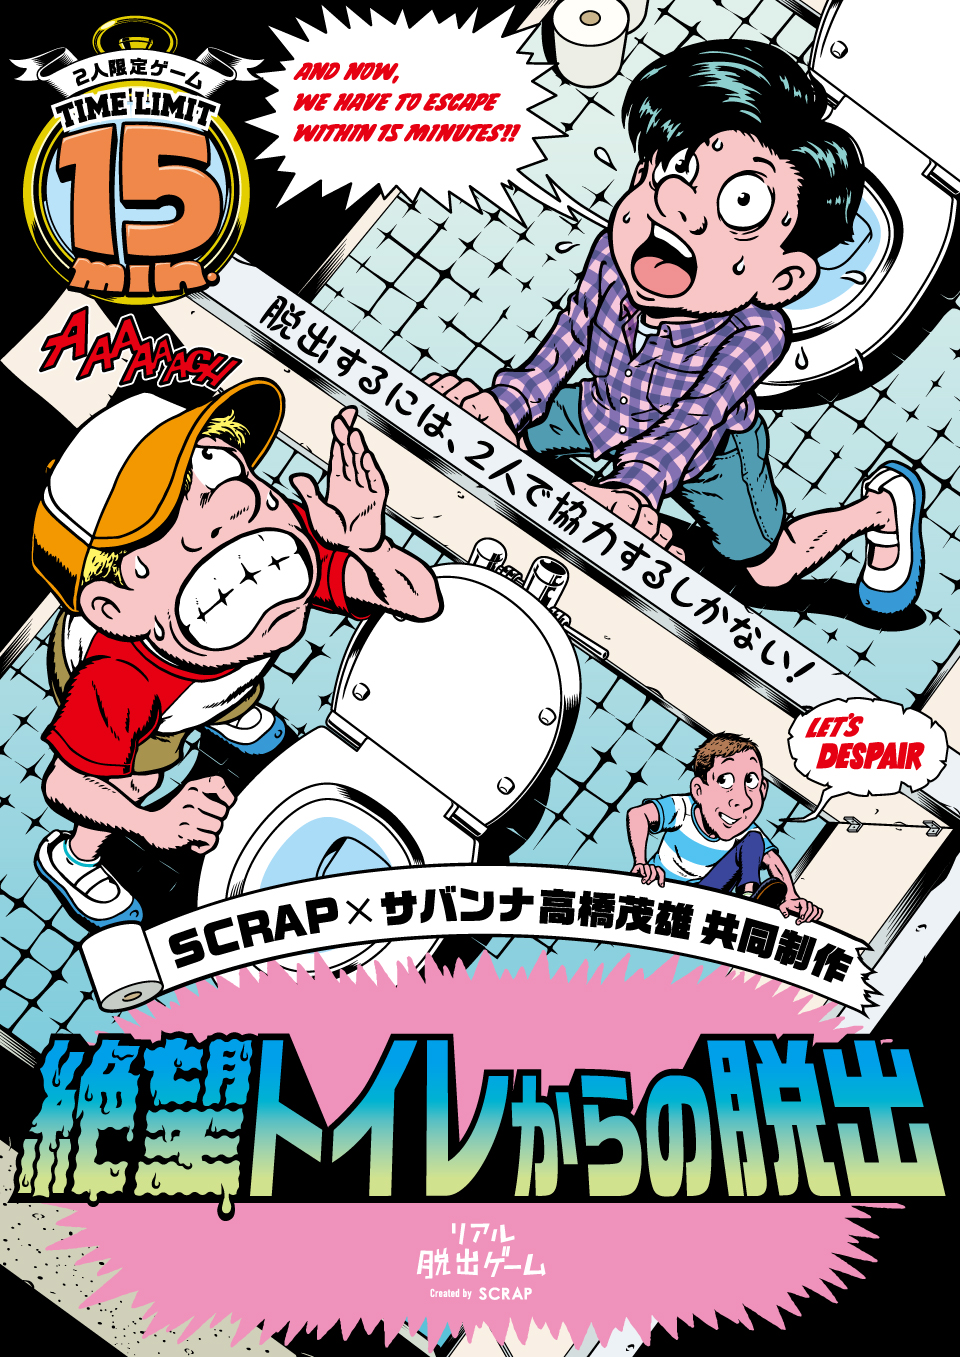 SCRAP×サバンナ高橋茂雄 共同制作 「絶望トイレからの脱出」 はしごキャンペーン開催！！ トピックス